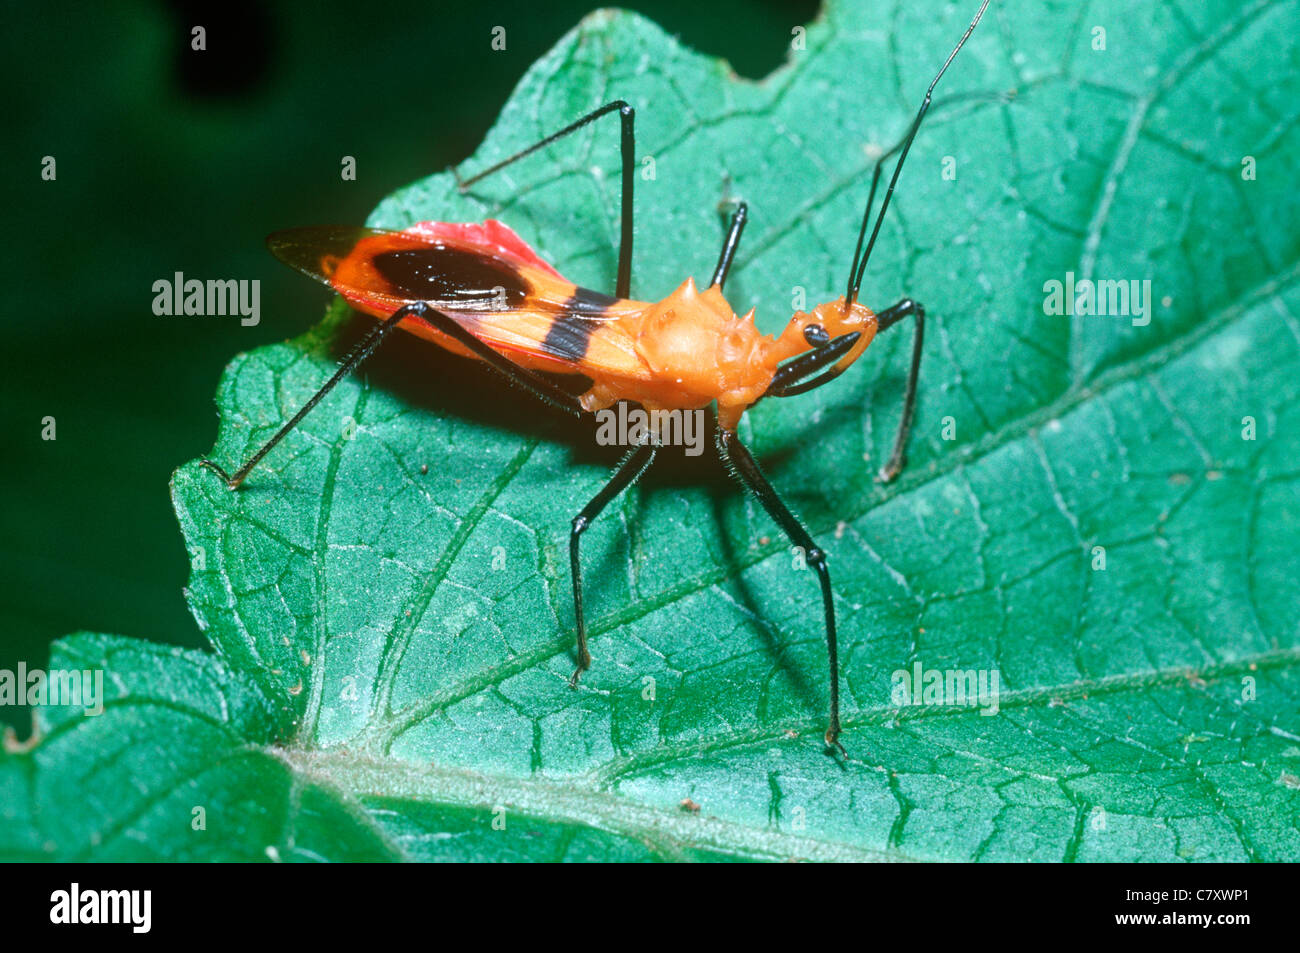 Assassin-Bug (Margasus SP.: Reduviidae), warnend gefärbte Arten im Regenwald, Madagaskar Stockfoto